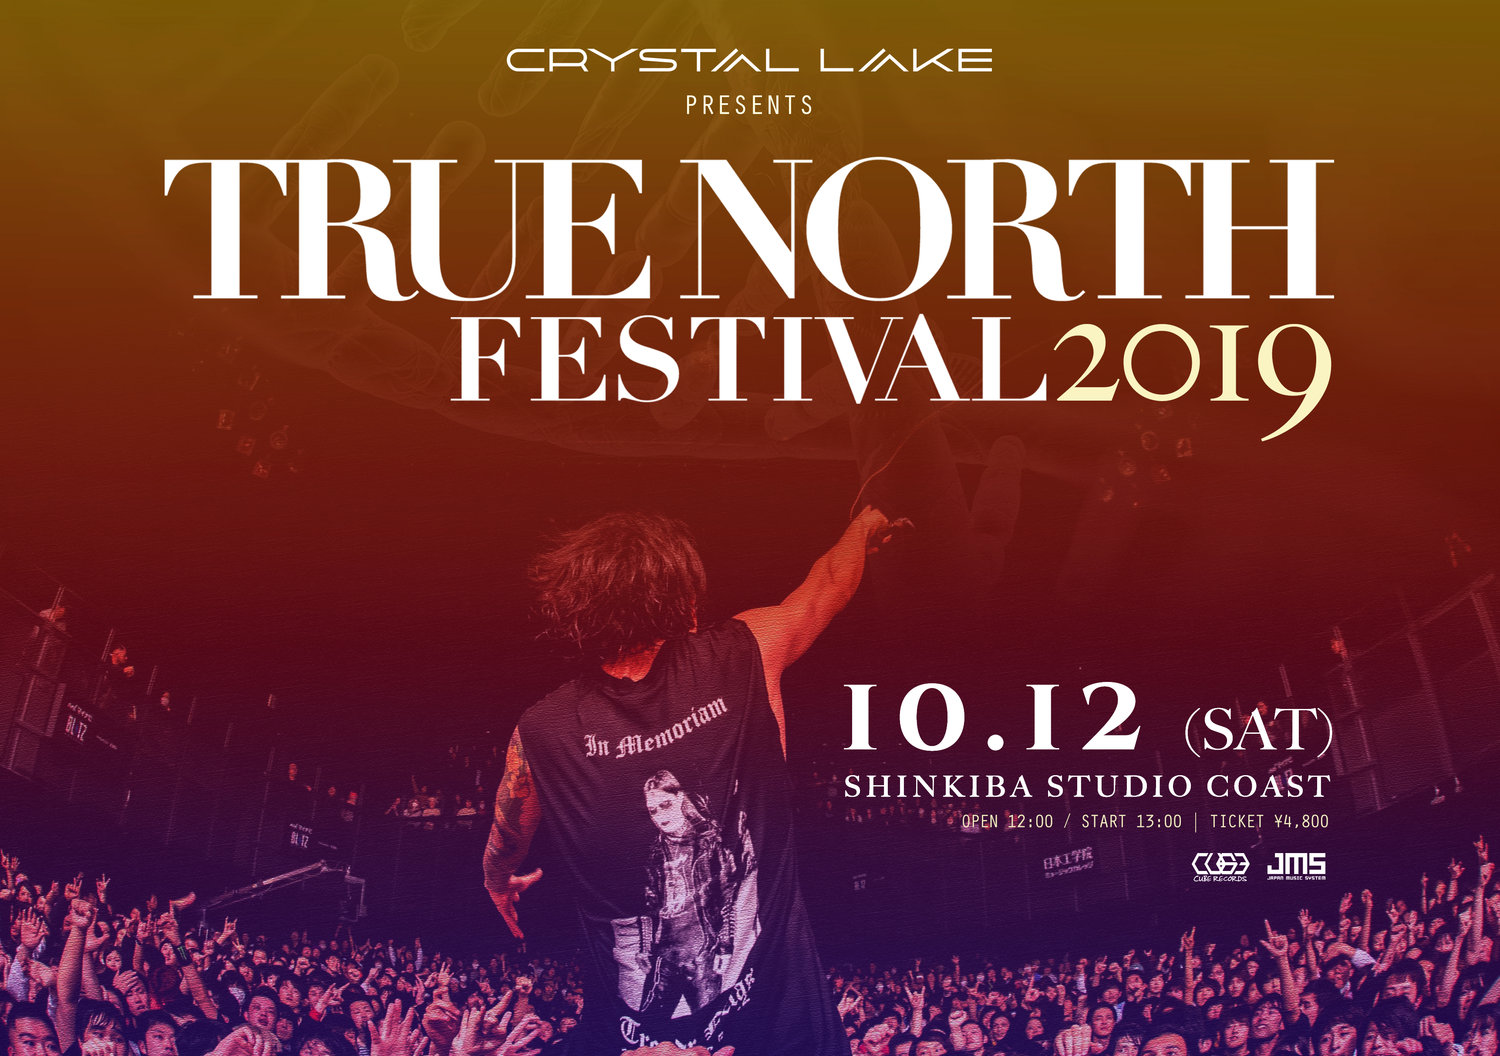 Crystal Lake TRUE NORTH FESTIVAL 2019